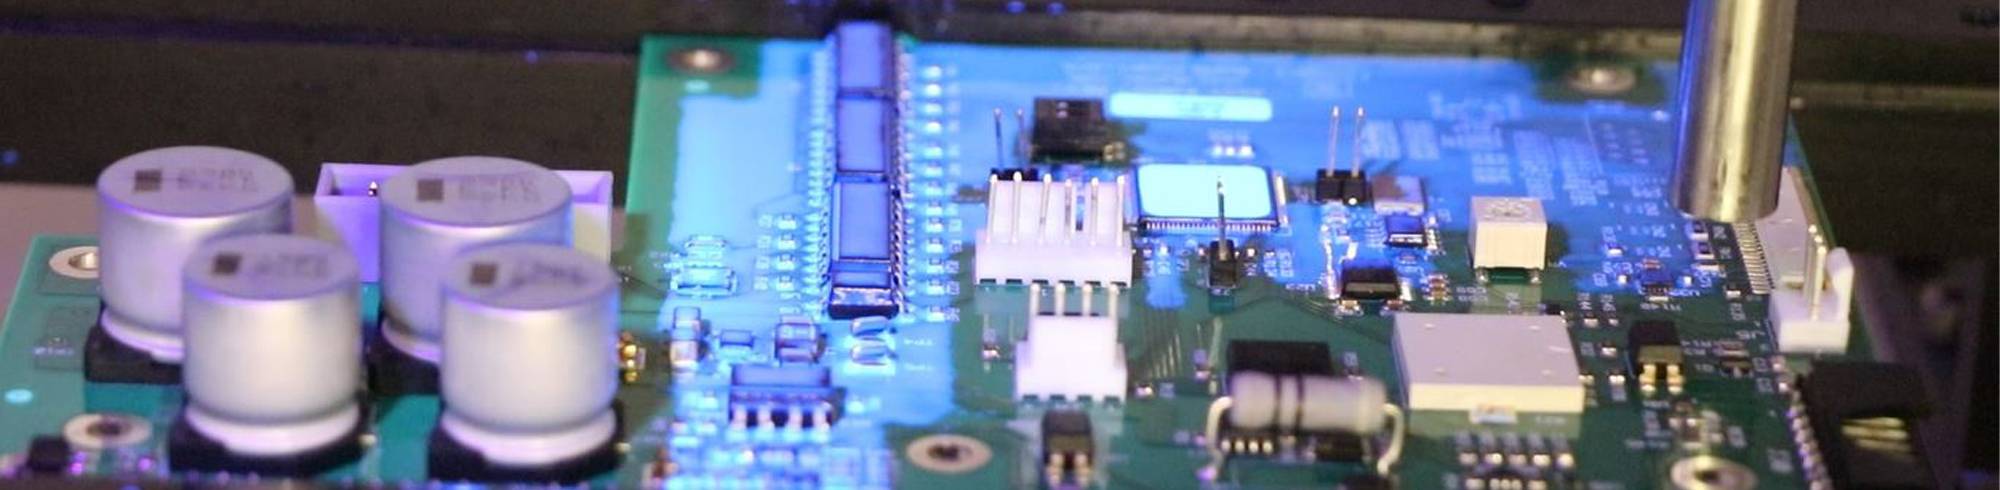 PCB 기판에 보이는 산업용 접착 공정을 위한 광경화성 코팅제